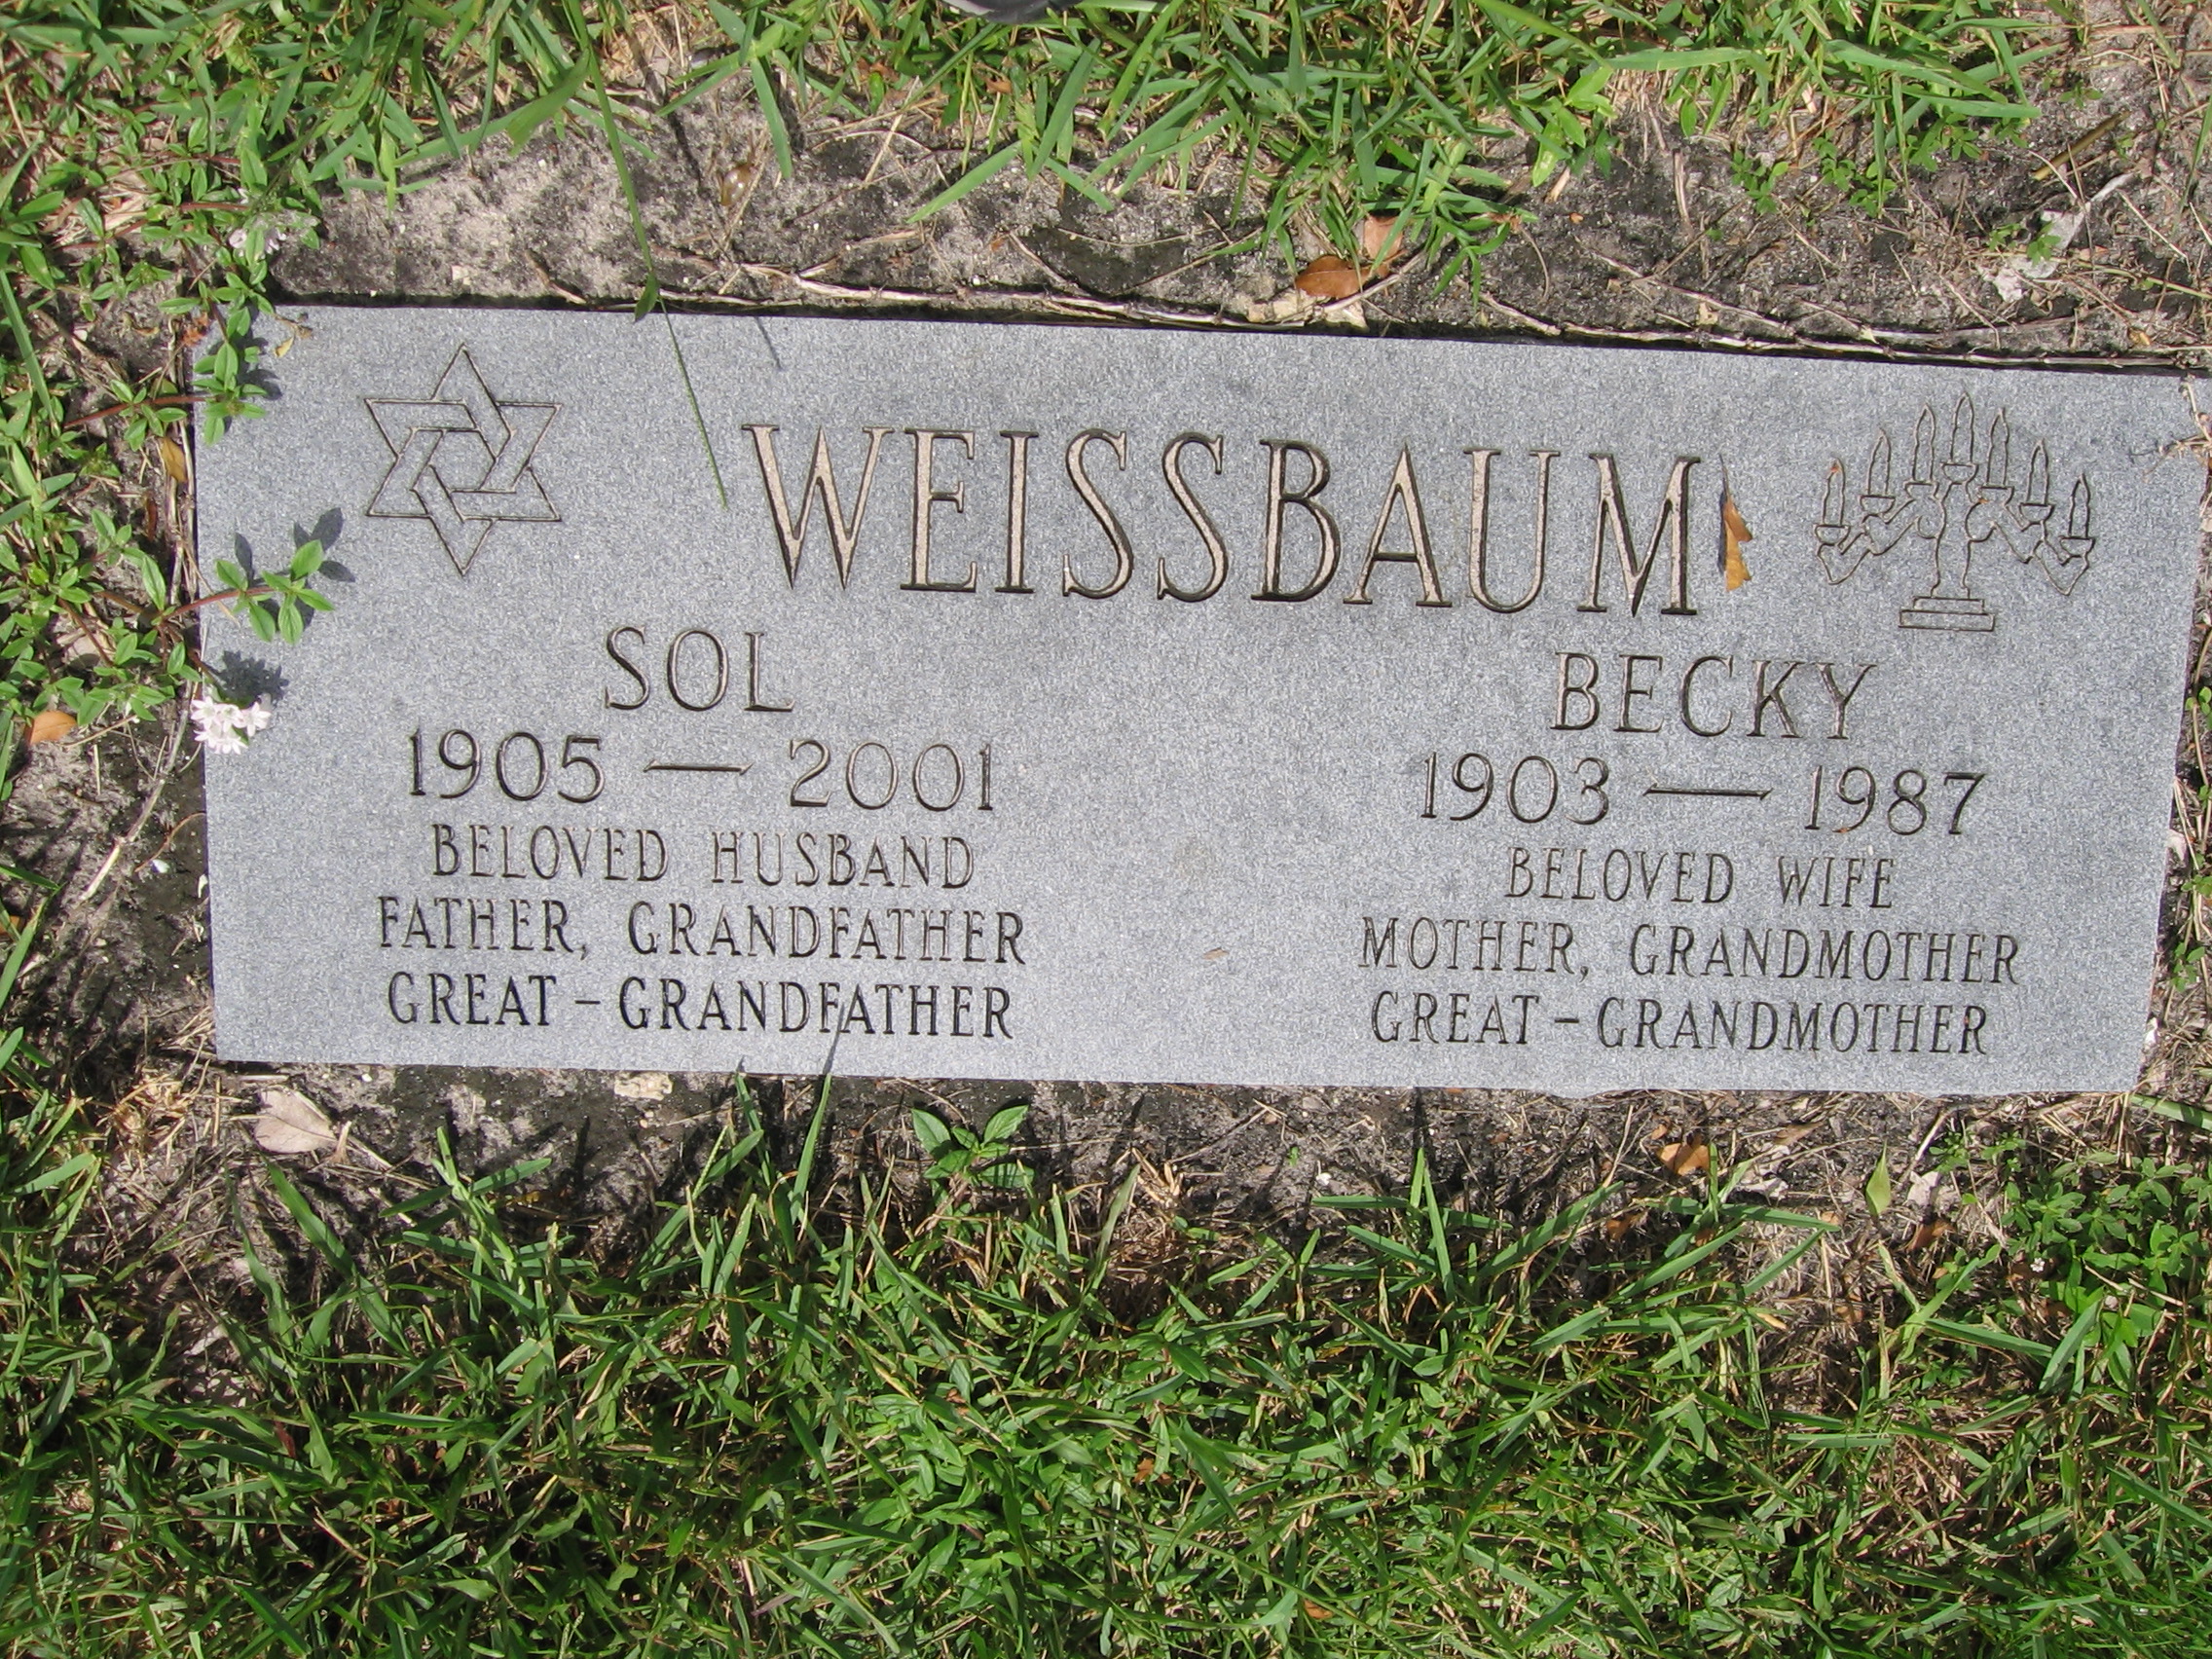 Becky Weissbaum